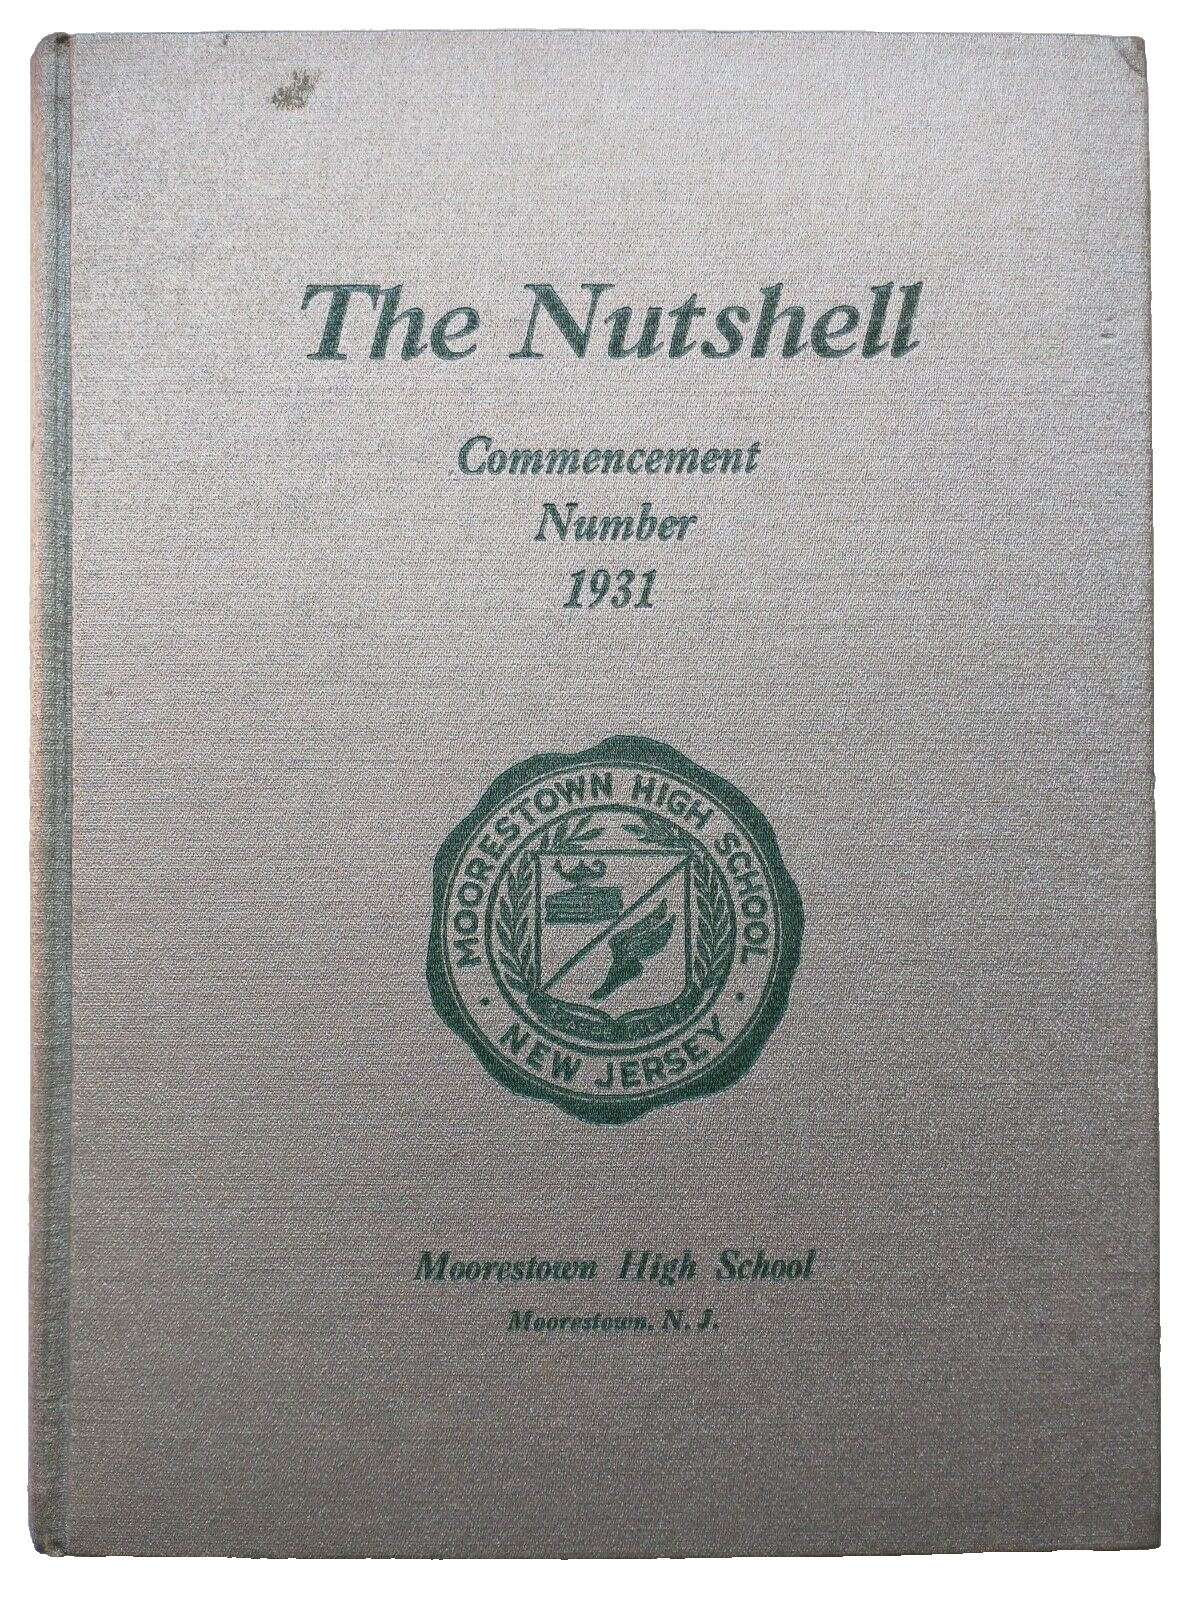 The Nutshell Commencement 1931 Moorestown New Jersey High School Yearbook